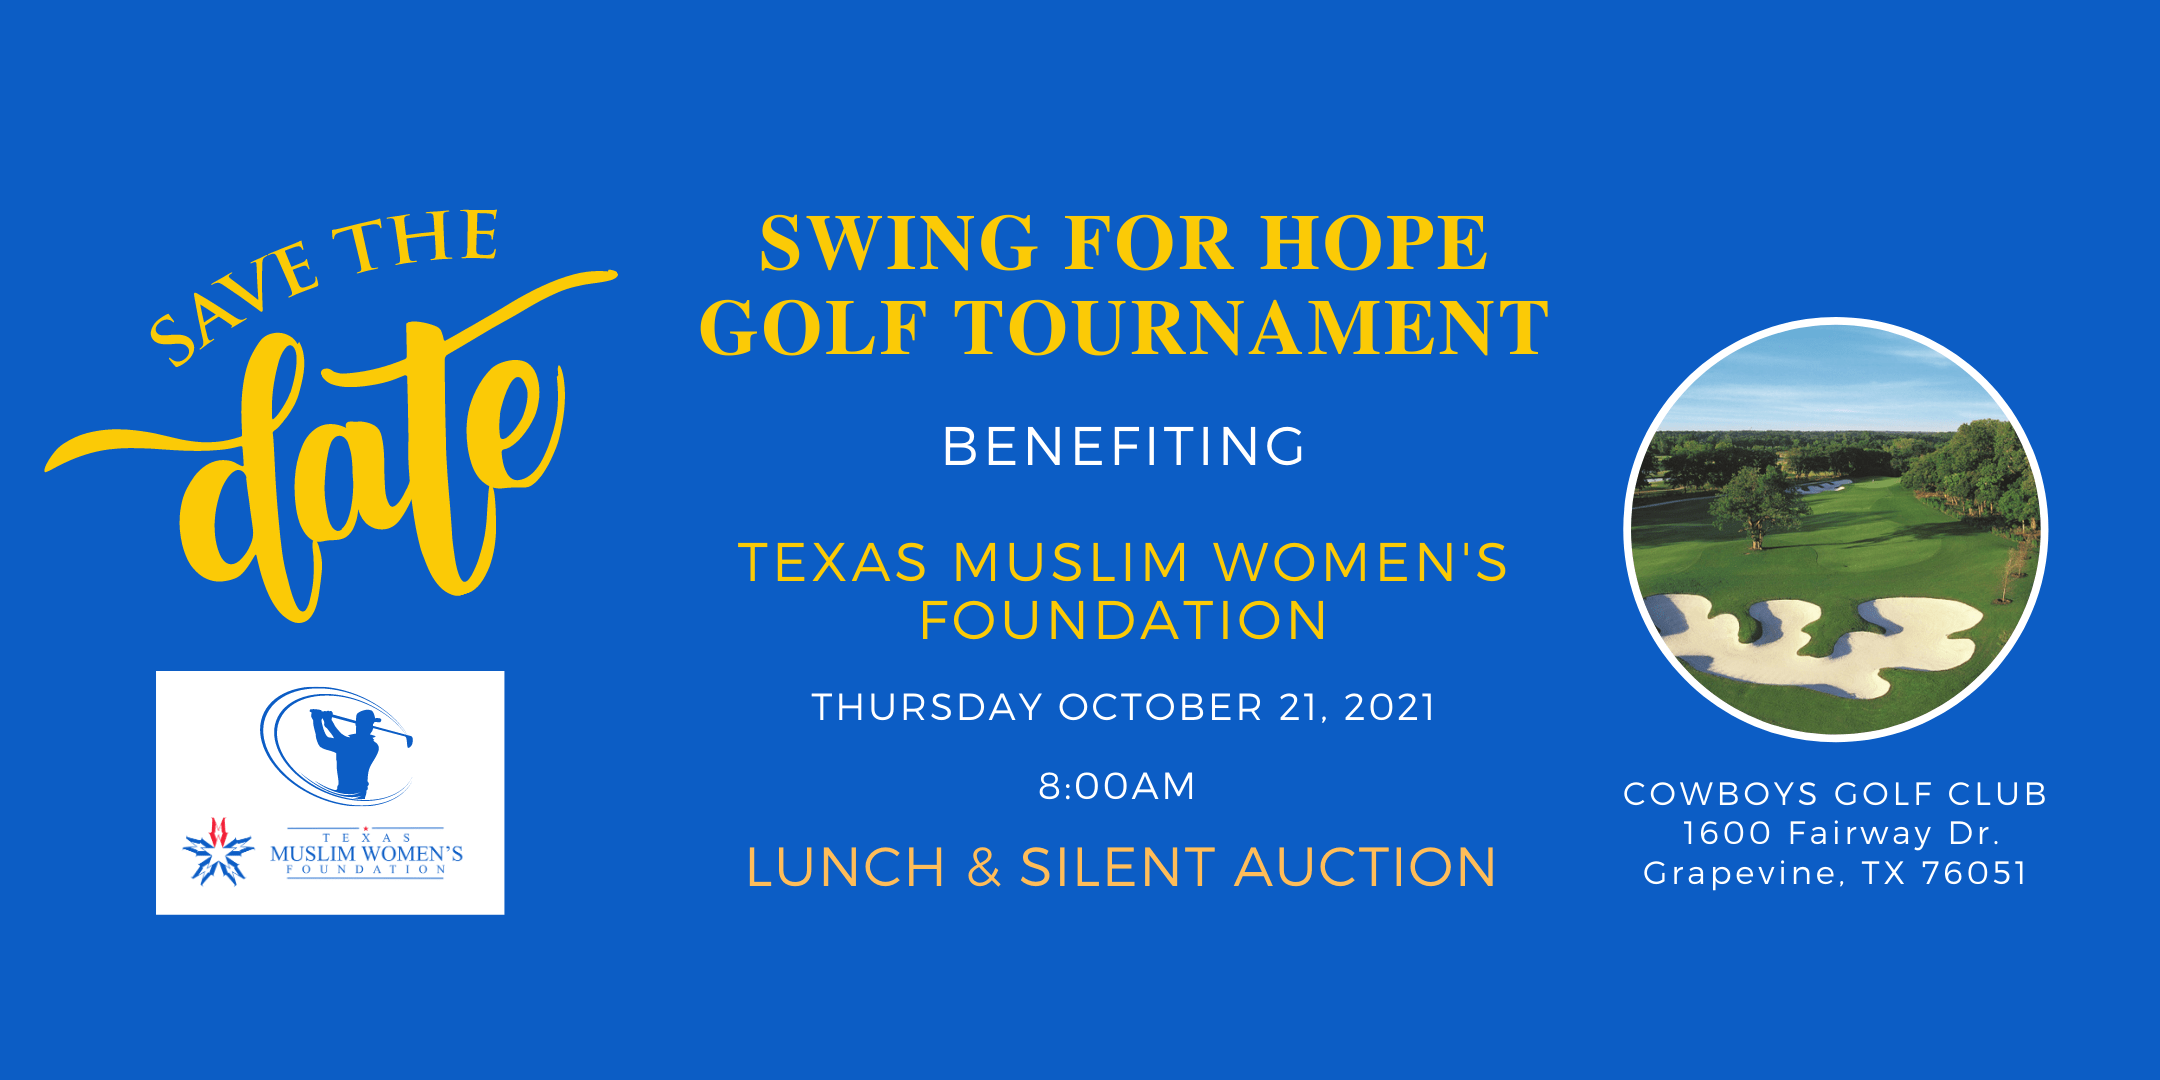 Swing for Hope Golf Tournament